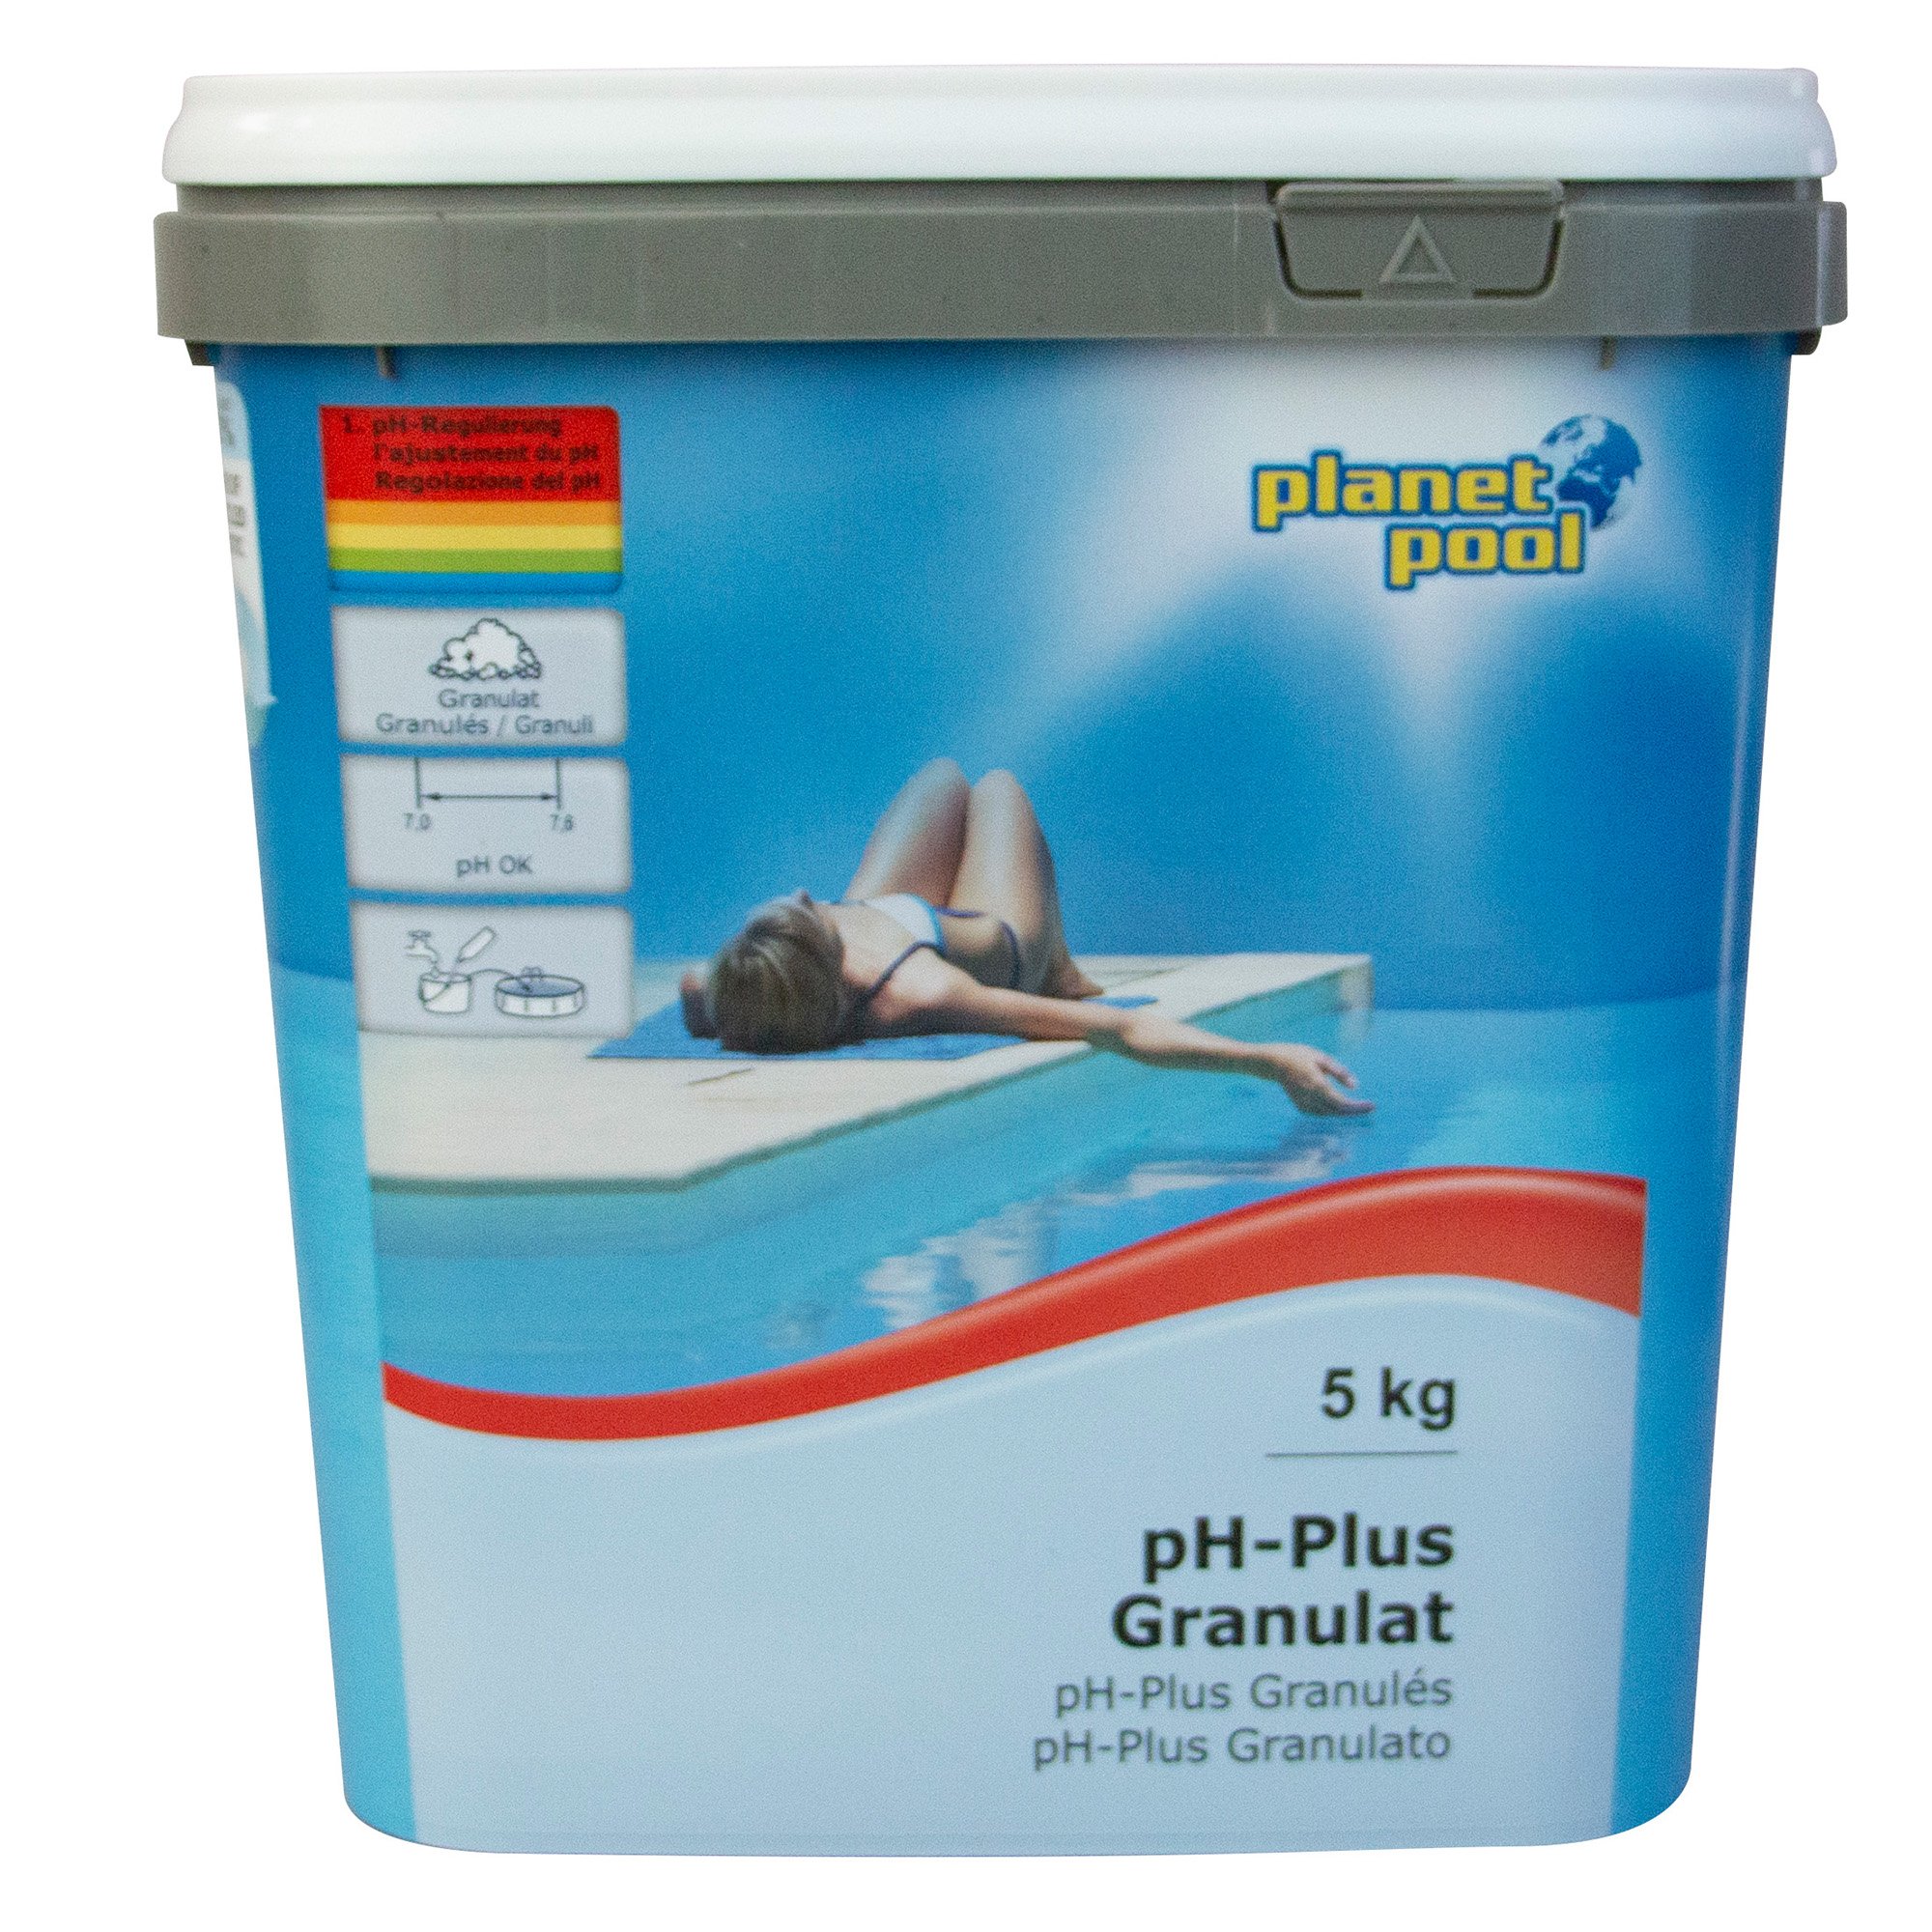 Planet Pool - pH-Plus Granulat, 5 kg